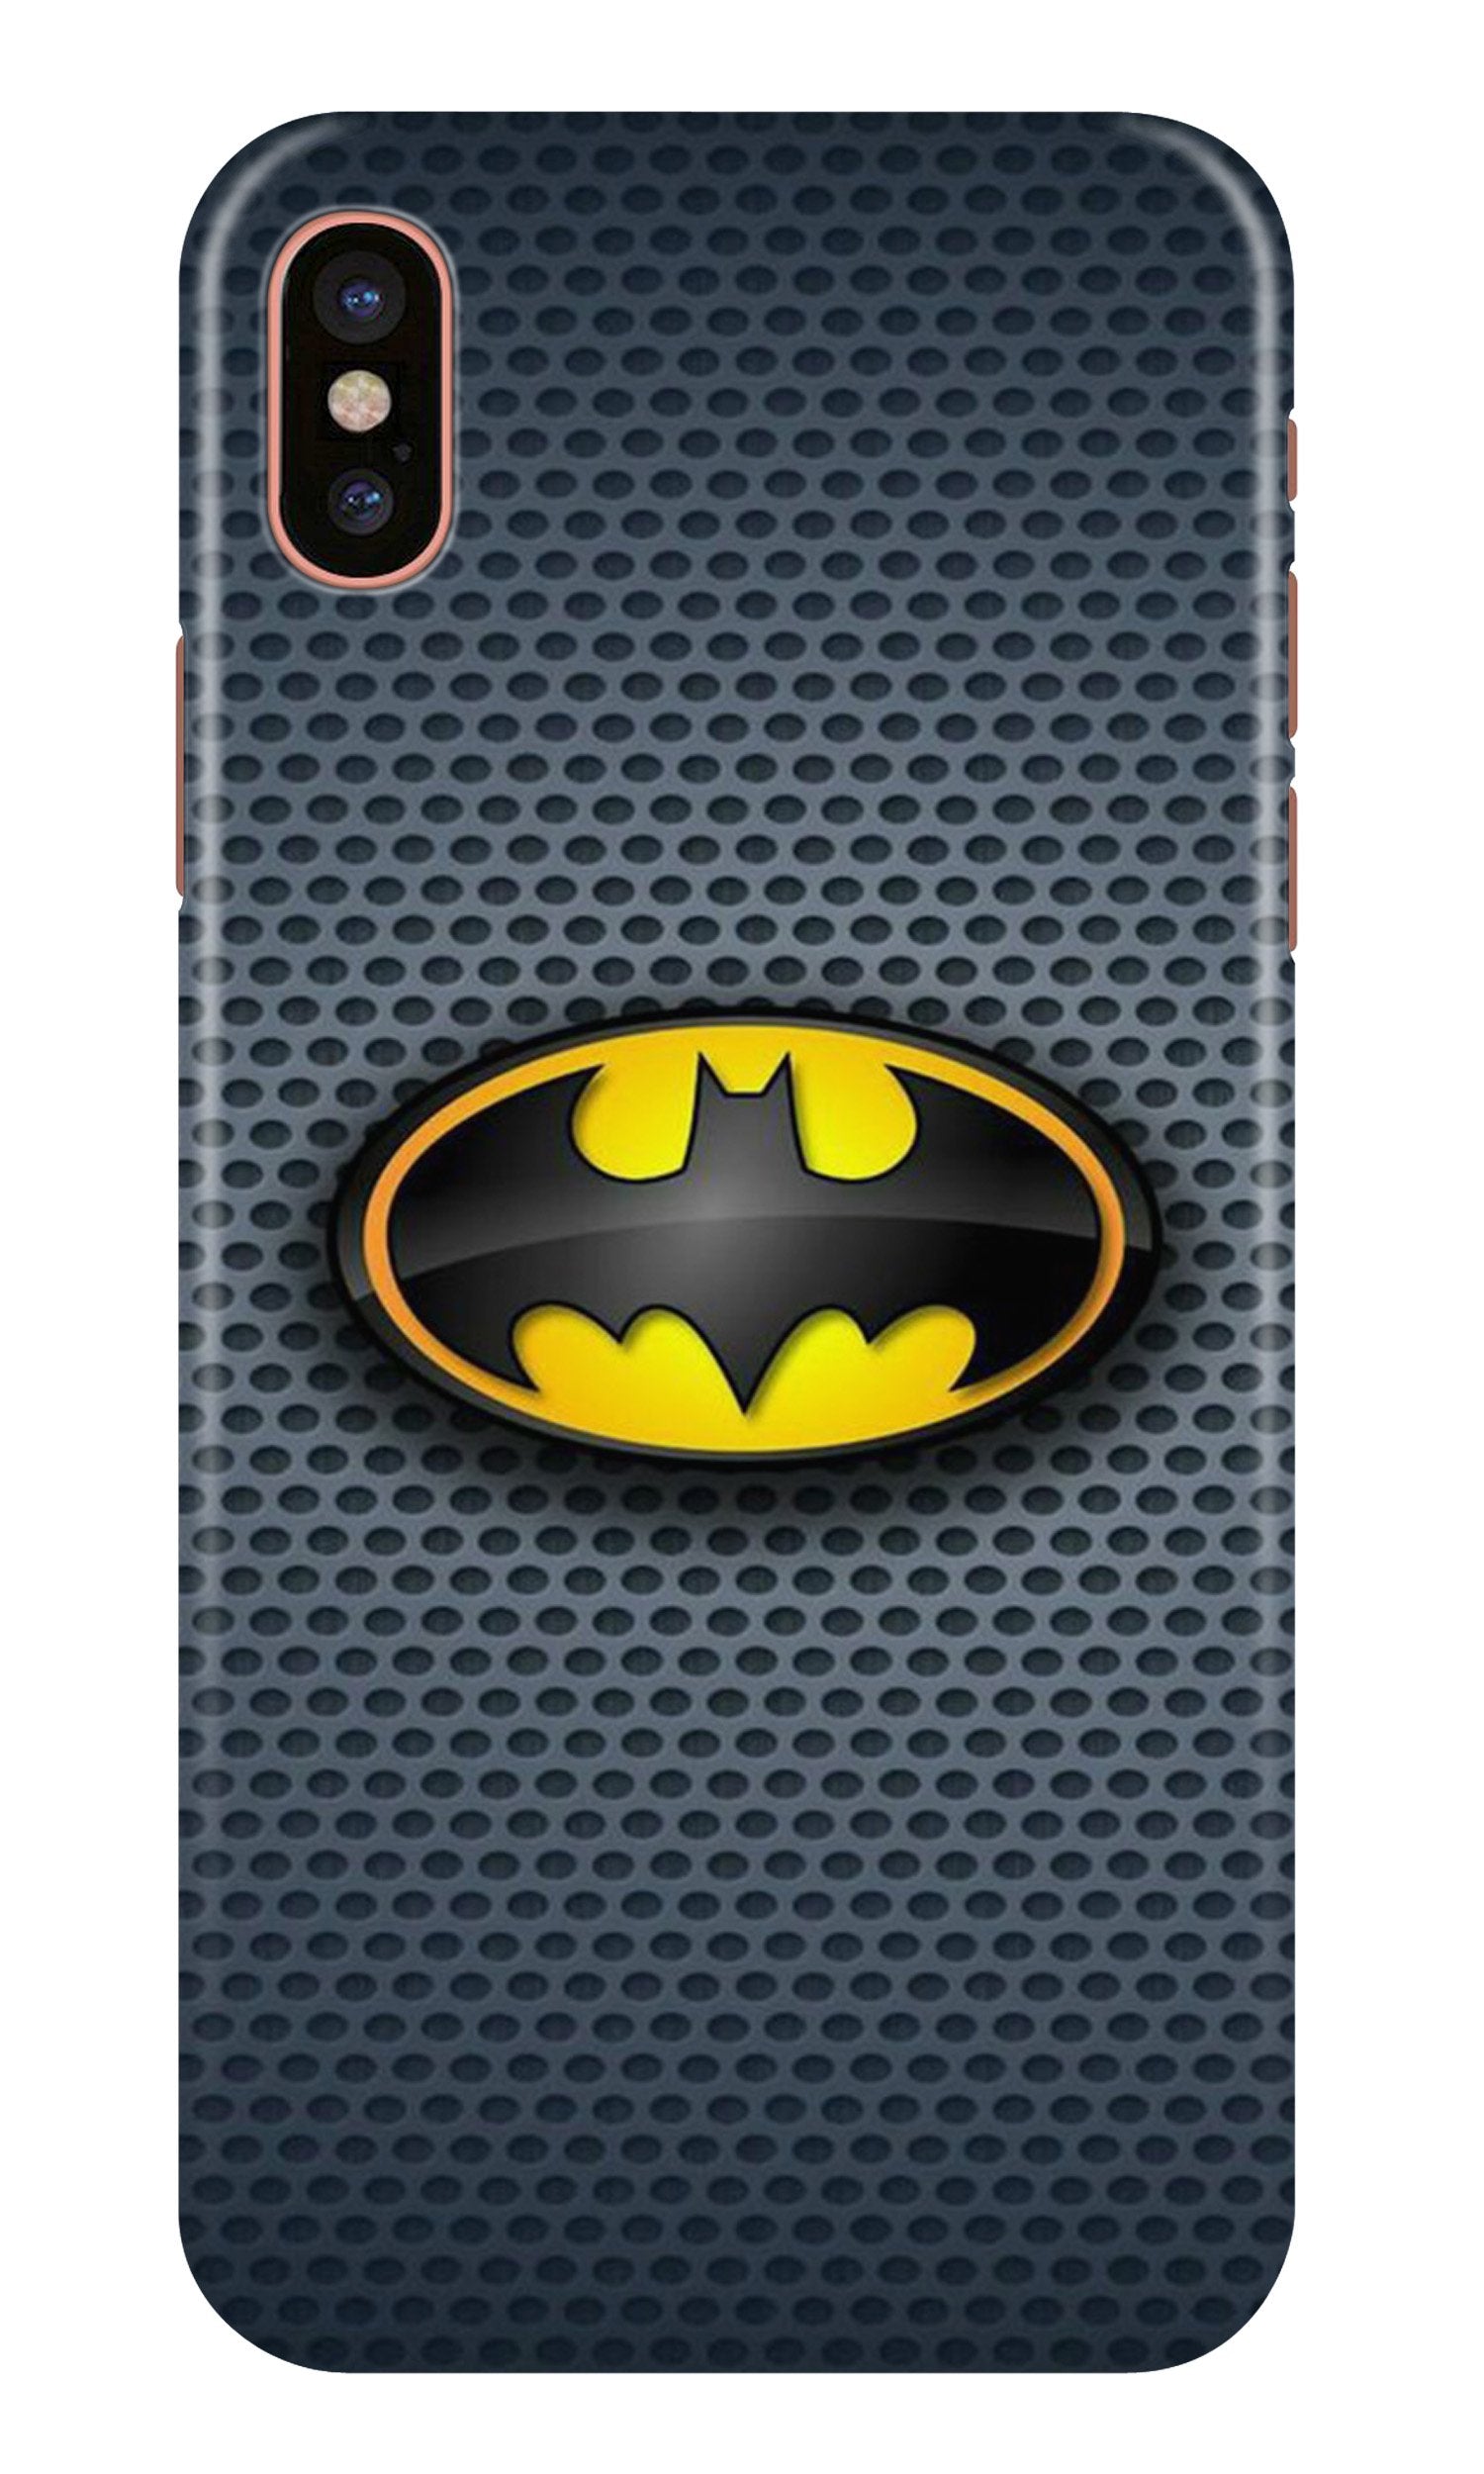 Batman Case for iPhone Xr (Design No. 244)